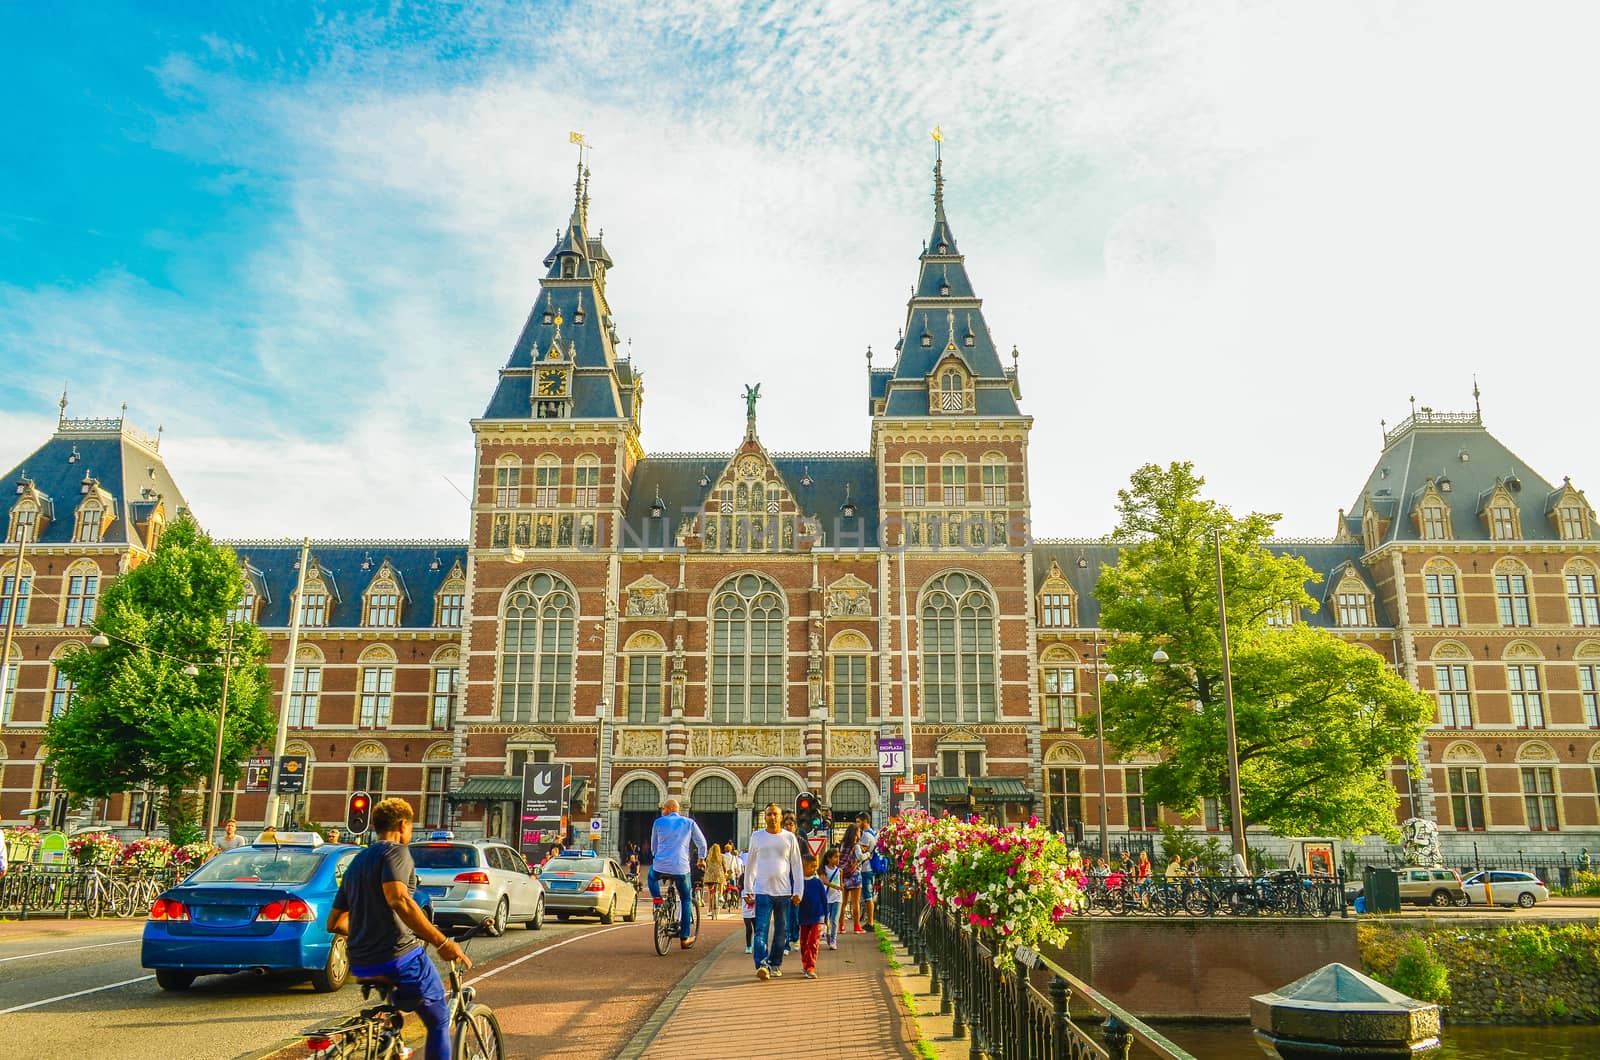 The Rijksmuseum - Dutch national museum in Amsterdam, Nethelands (Holland) by chernobrovin